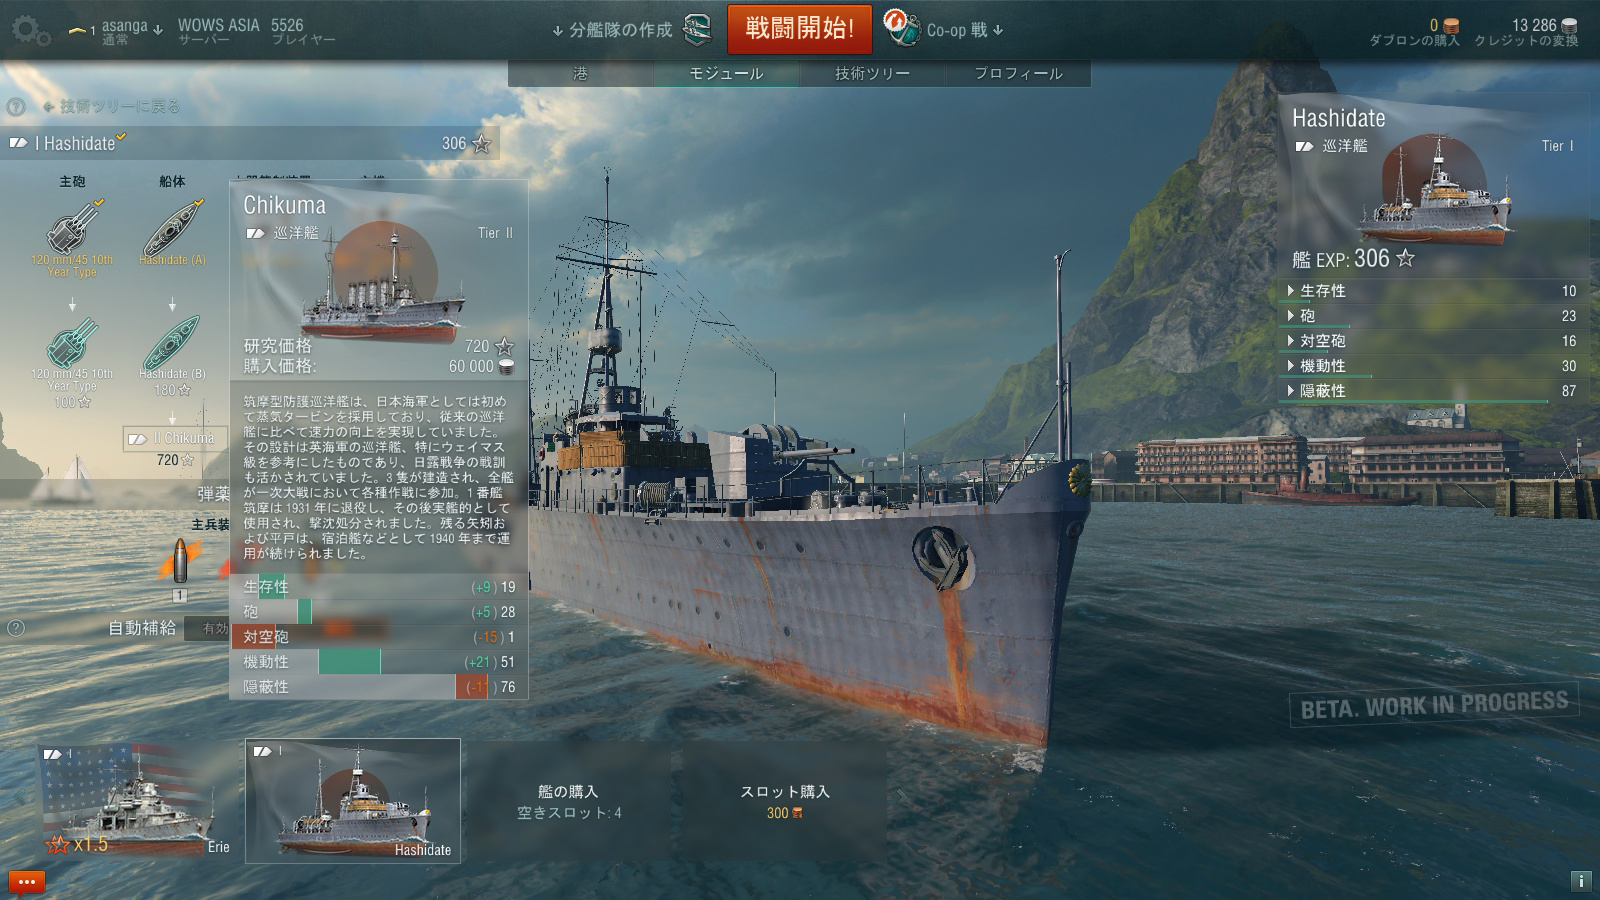 Wows Tier1 巡洋艦 日本 Hashidate World Of ジュゲのssぶらり旅